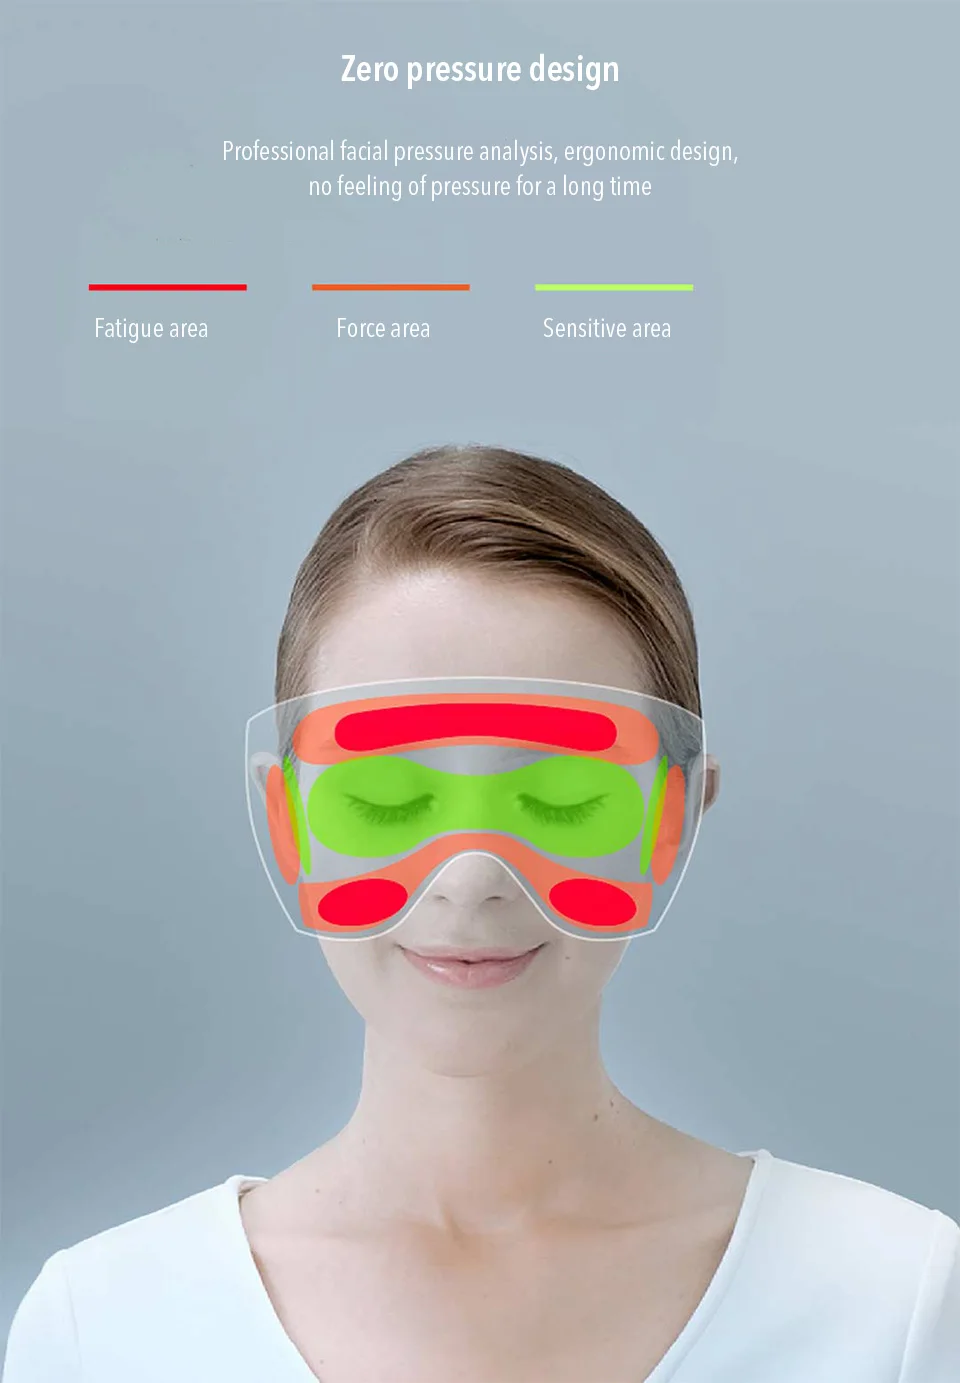 Xiaomi Mijia Dreamlight Wireless Heating Eye Mask Portable Wireless Heating Full Shade Hot Pack Smart Power Off 3D Smart Home